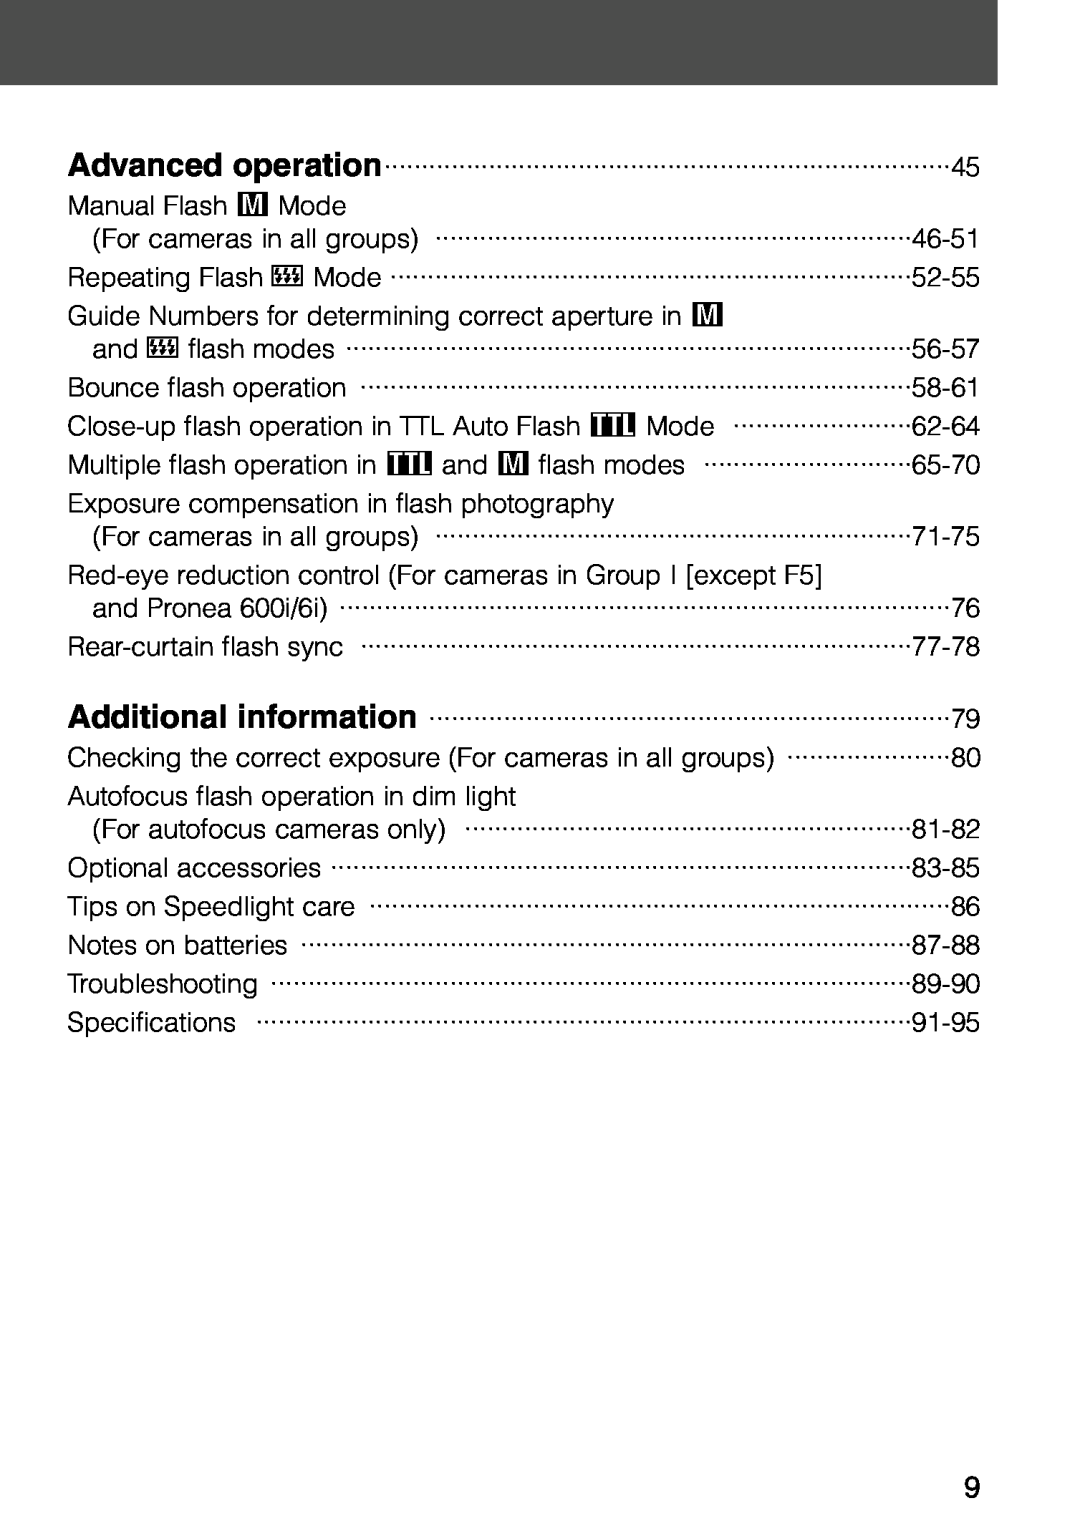 Nikon SB-28 instruction manual Manual Flash ƒ Mode 